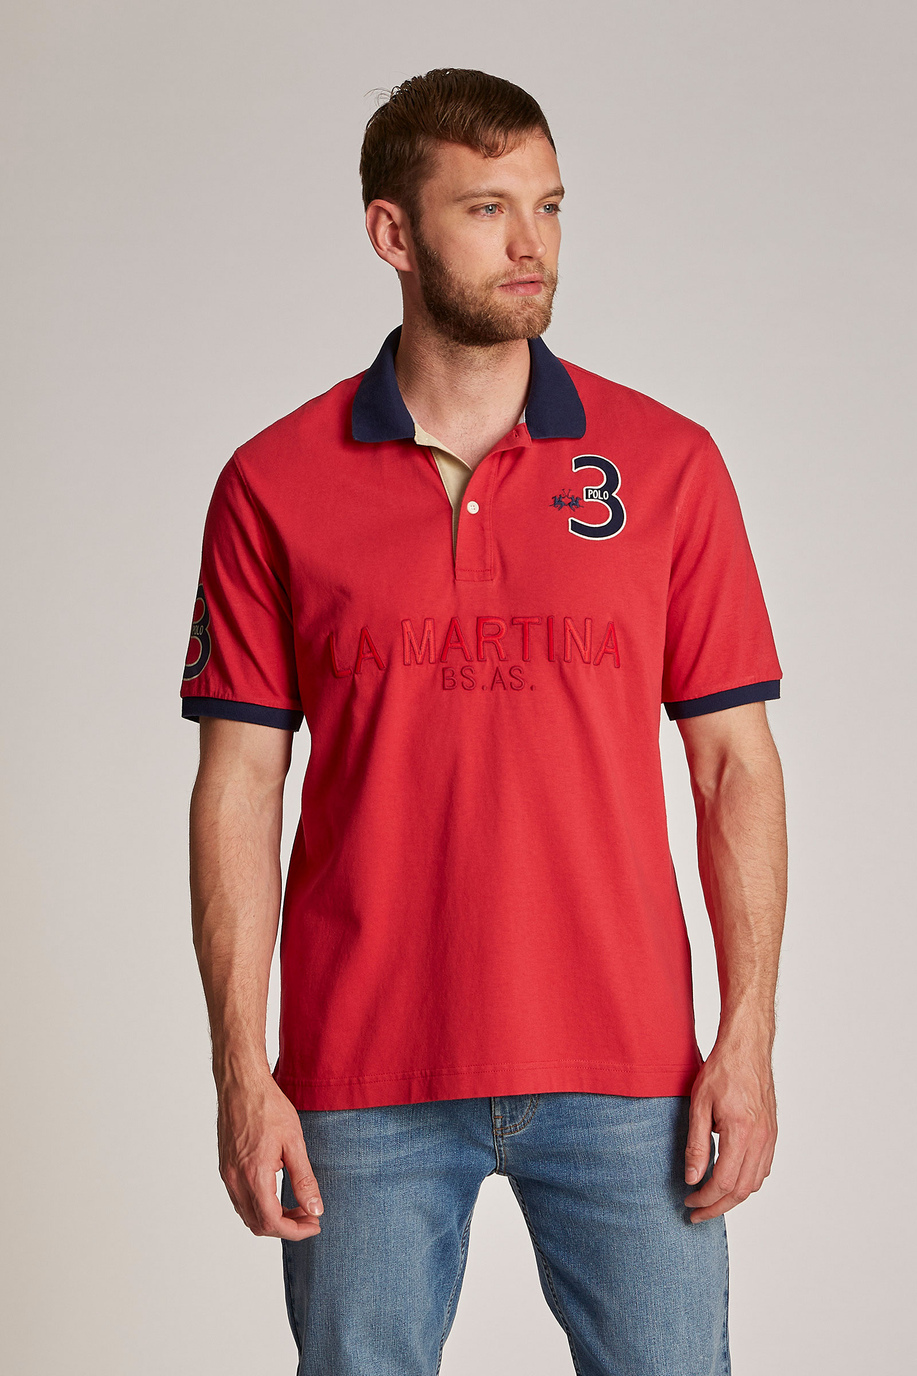 Men's oversized plain-coloured short-sleeved polo shirt - Leyendas del Polo | La Martina - Official Online Shop